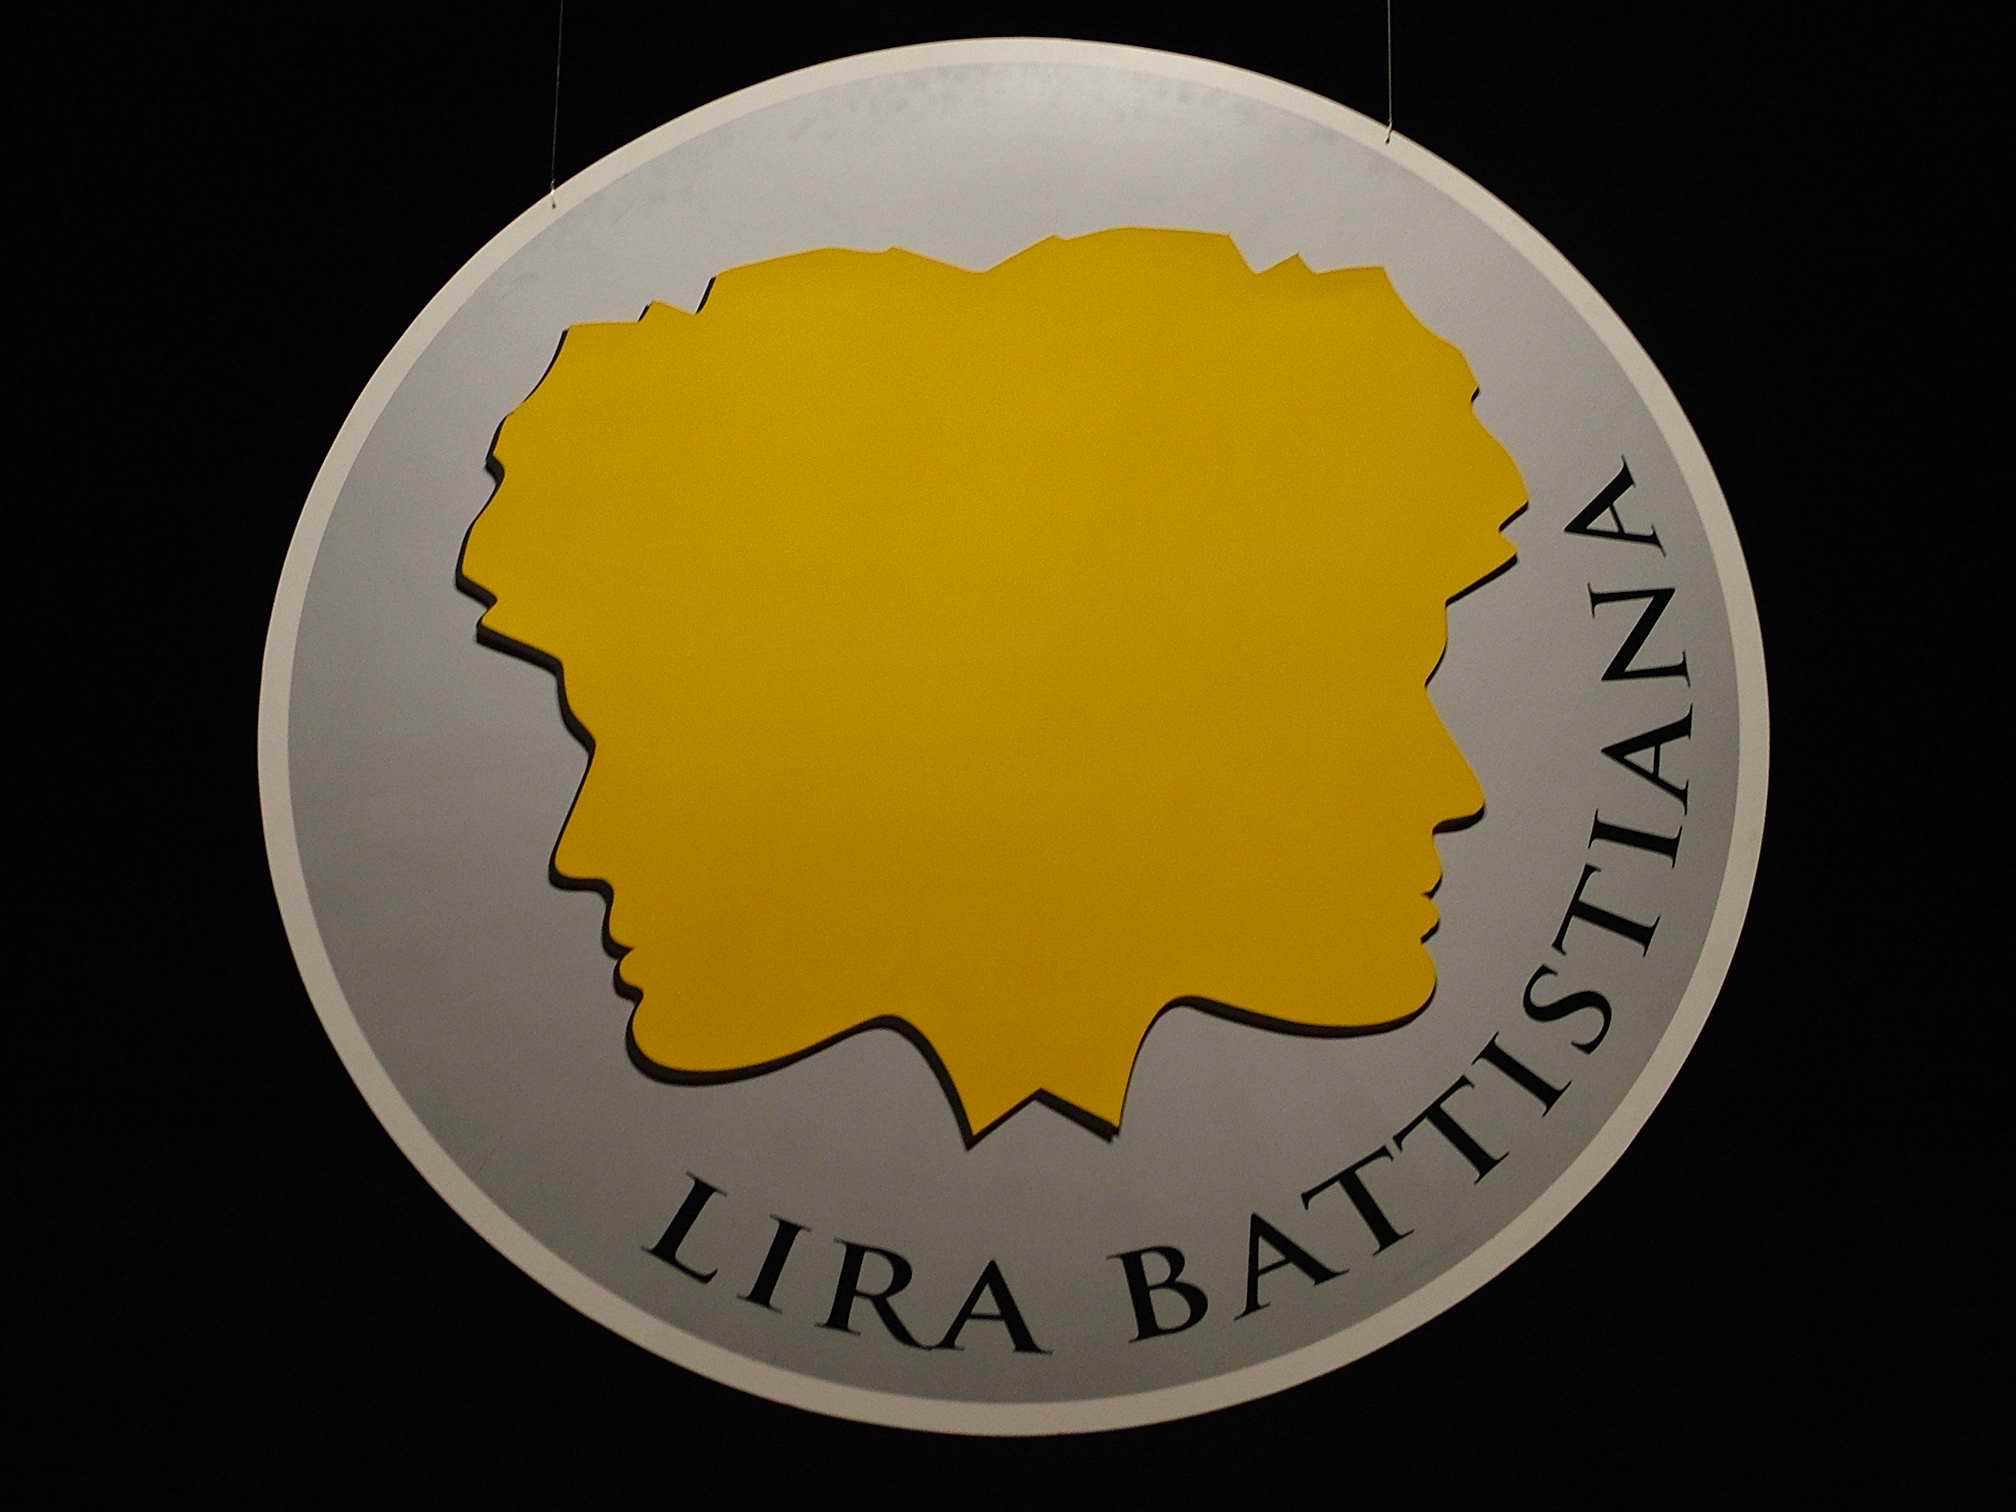 Lira Battistiana